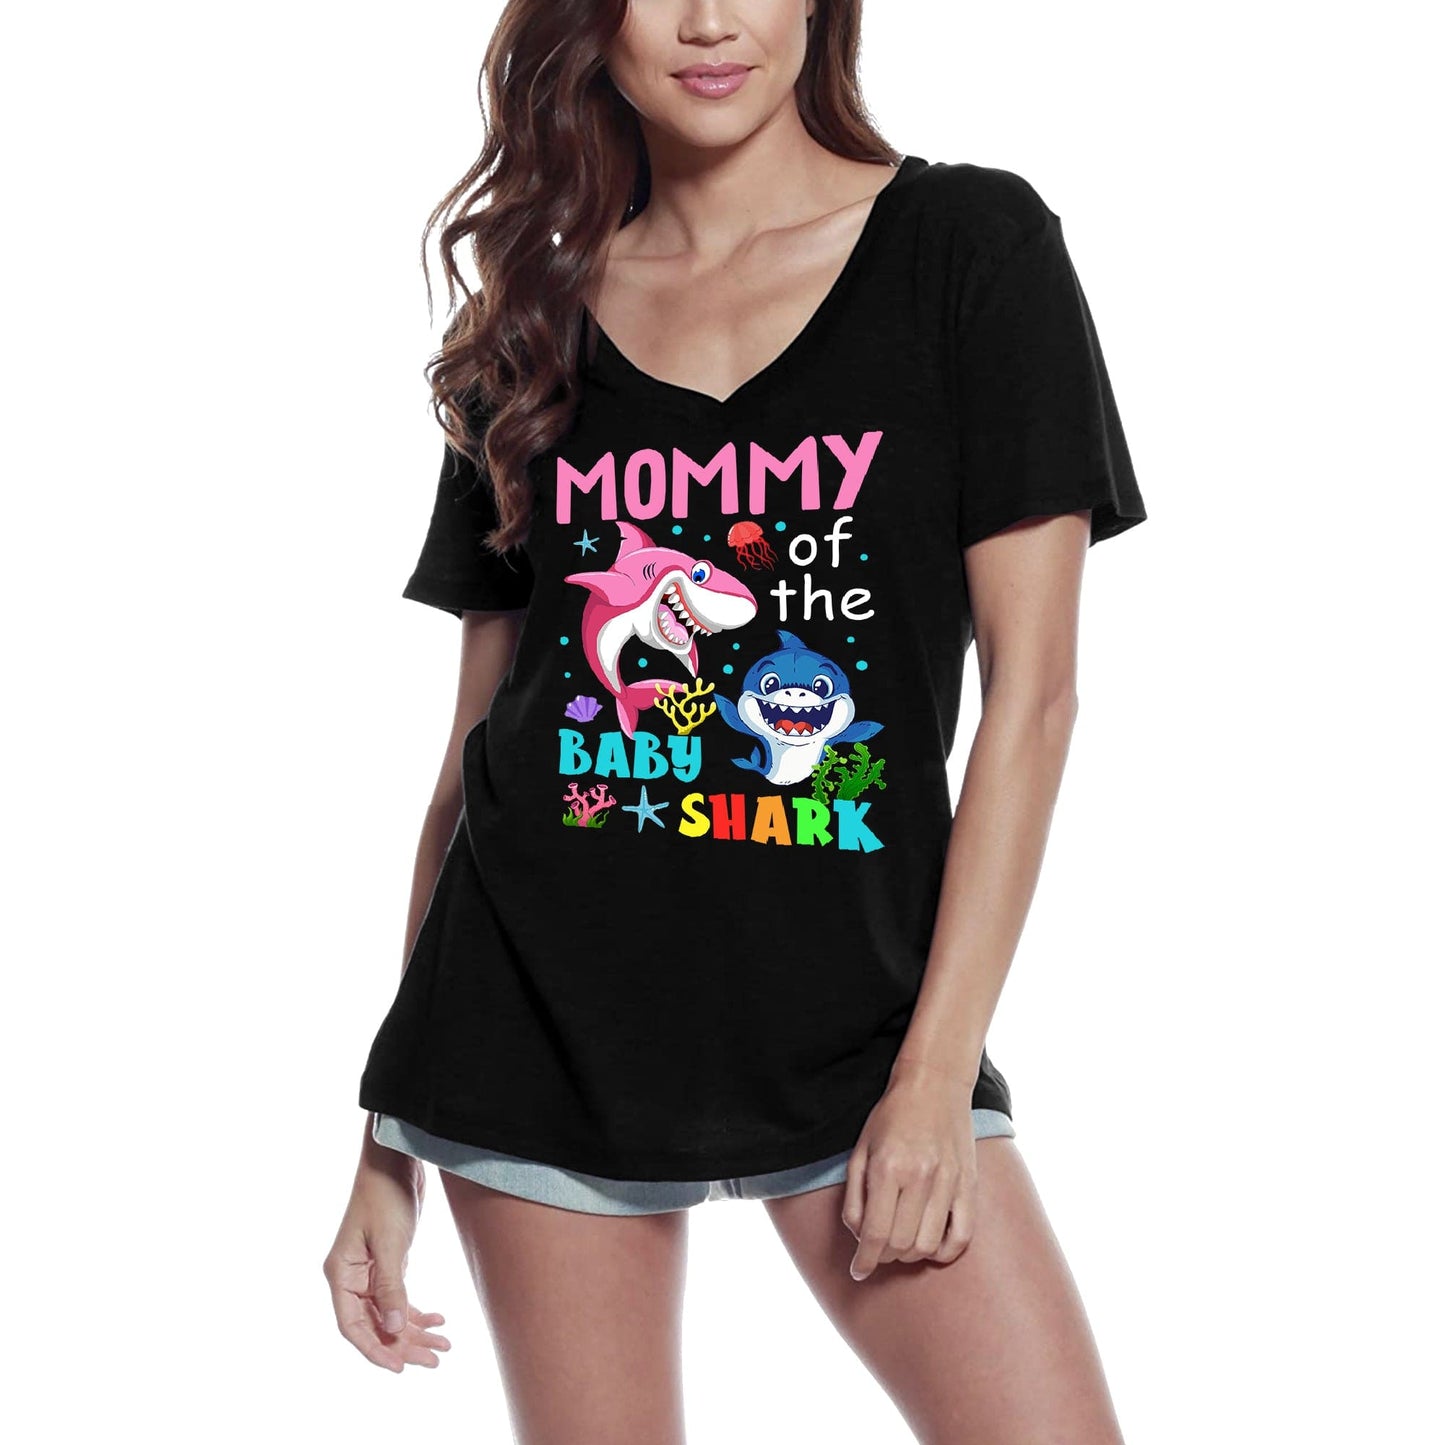 ULTRABASIC Women's T-Shirt Mommy of the Baby Shark - Funny Mother Tee Shirt